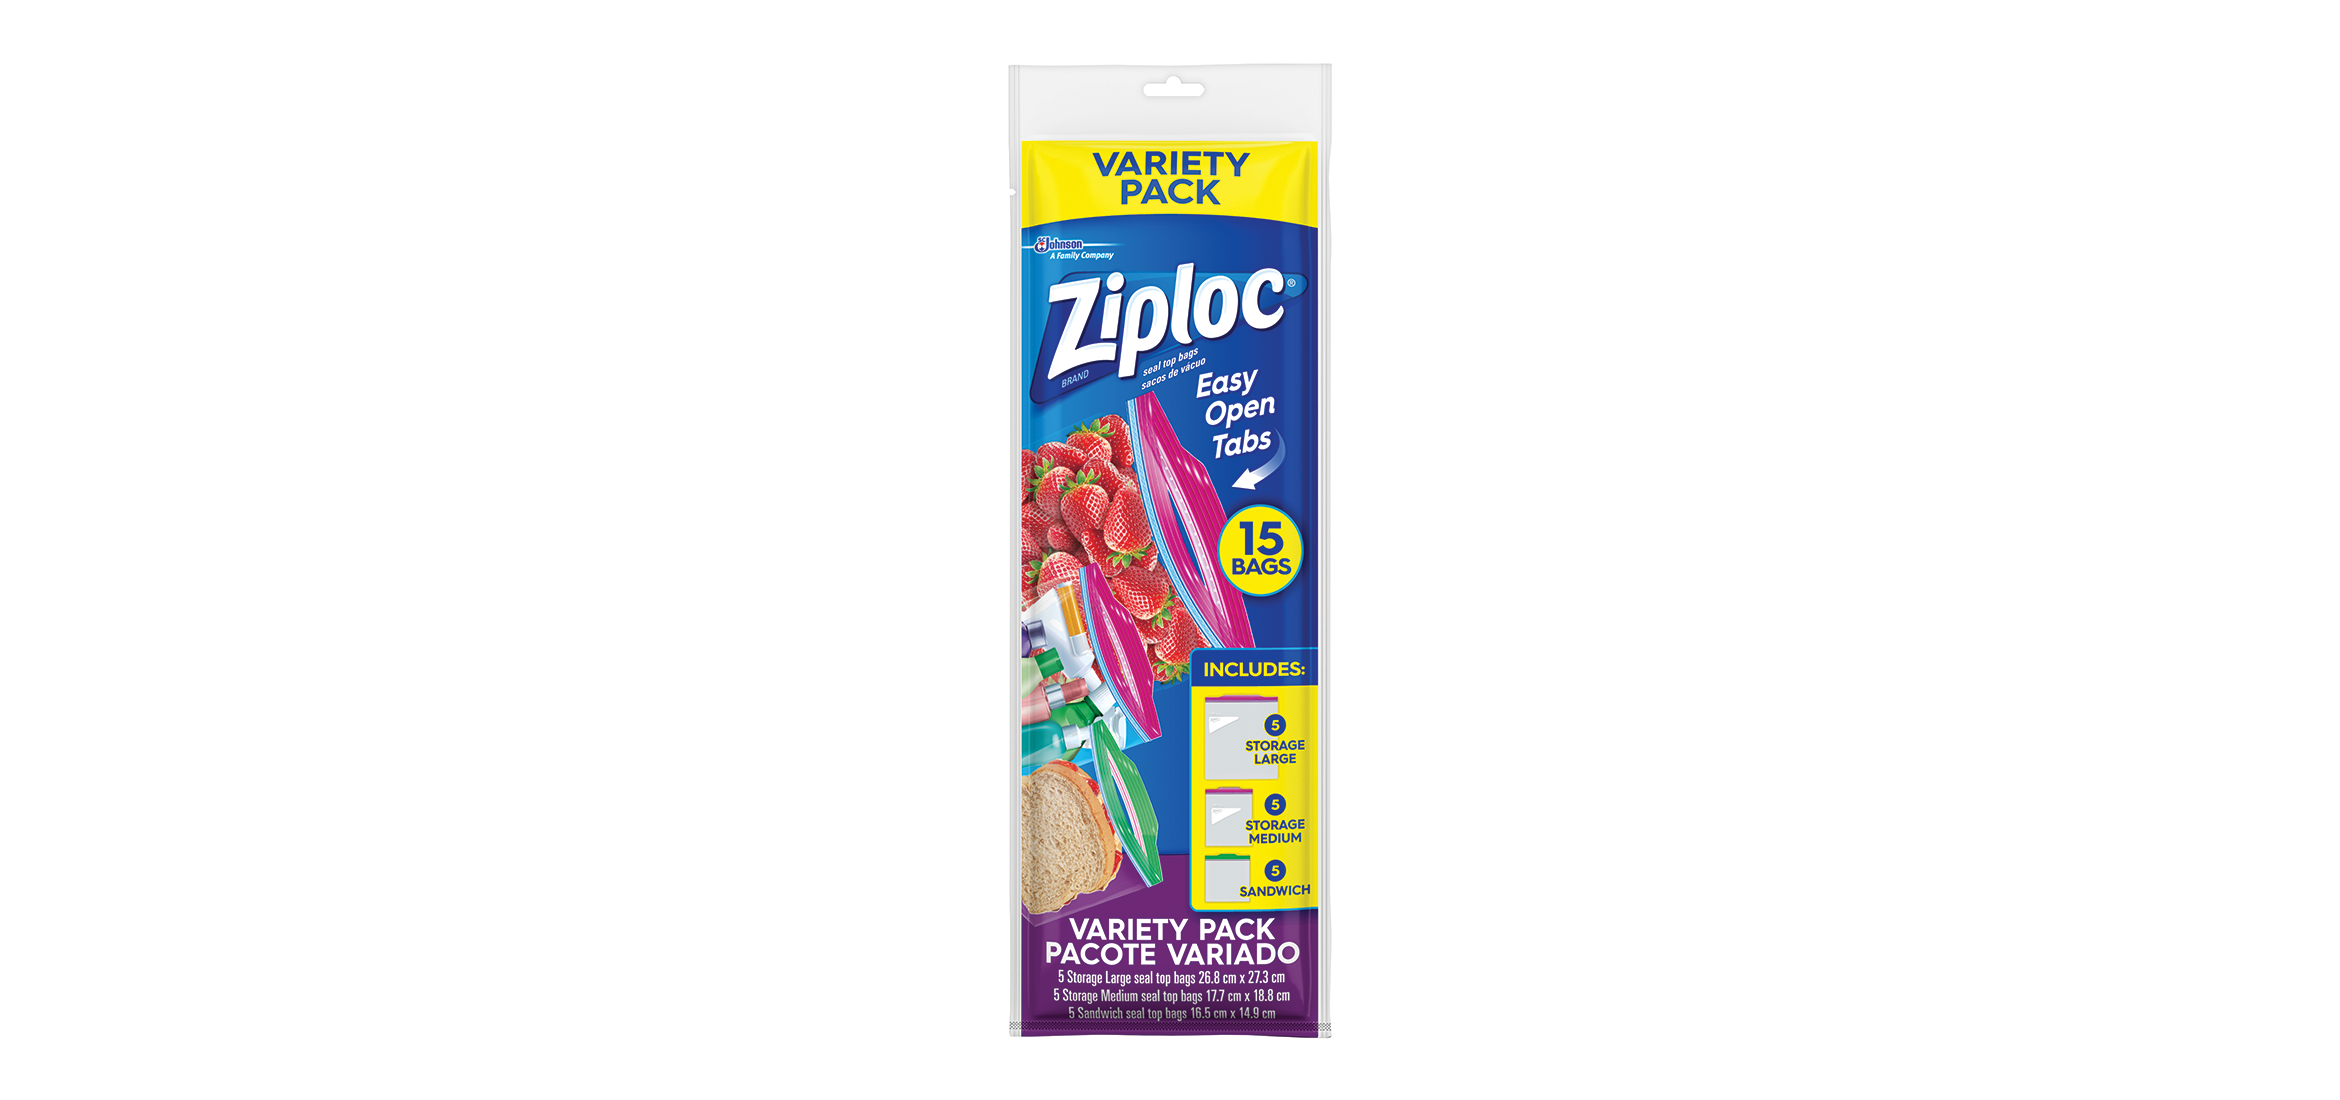 Ziploc Gallon, Quart, Sandwich, and Snack Storage Bags - Variety